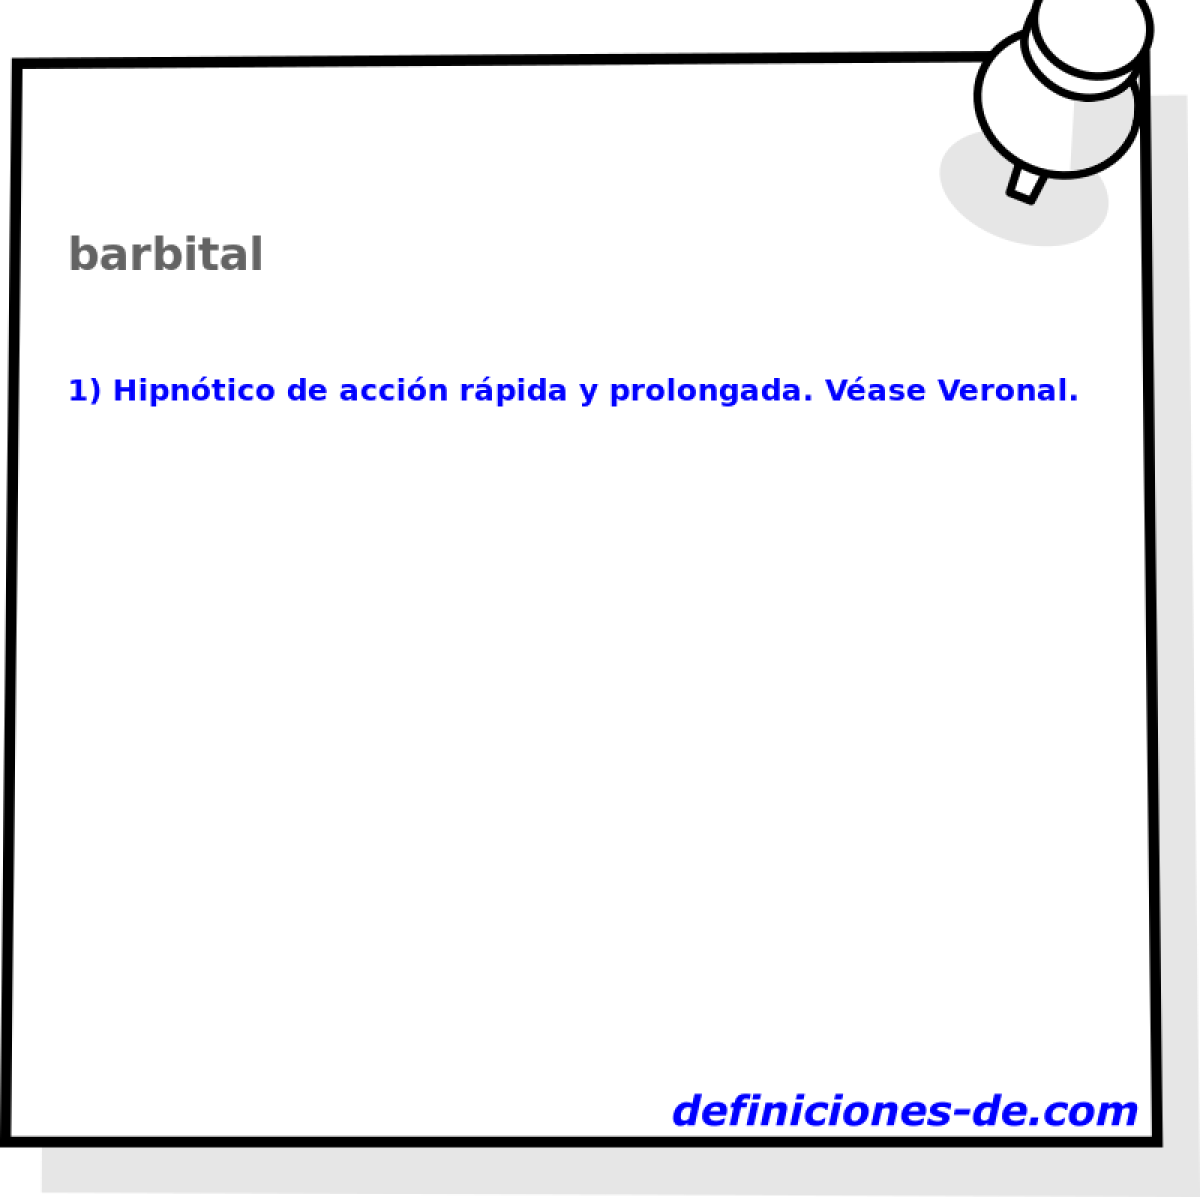 barbital 